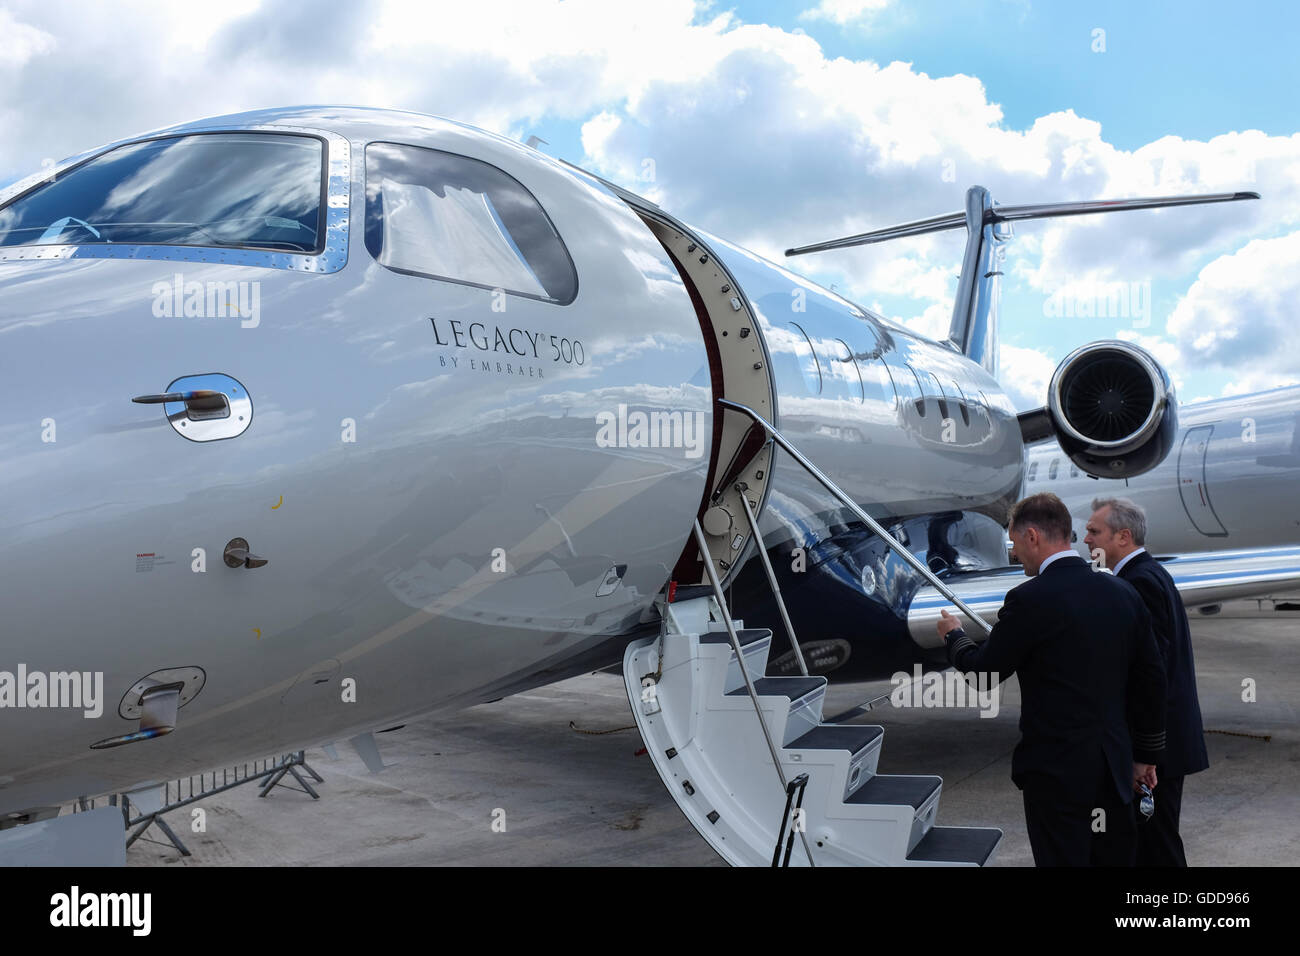 Die Legacy 500 Business-Jets von Embraer. Stockfoto